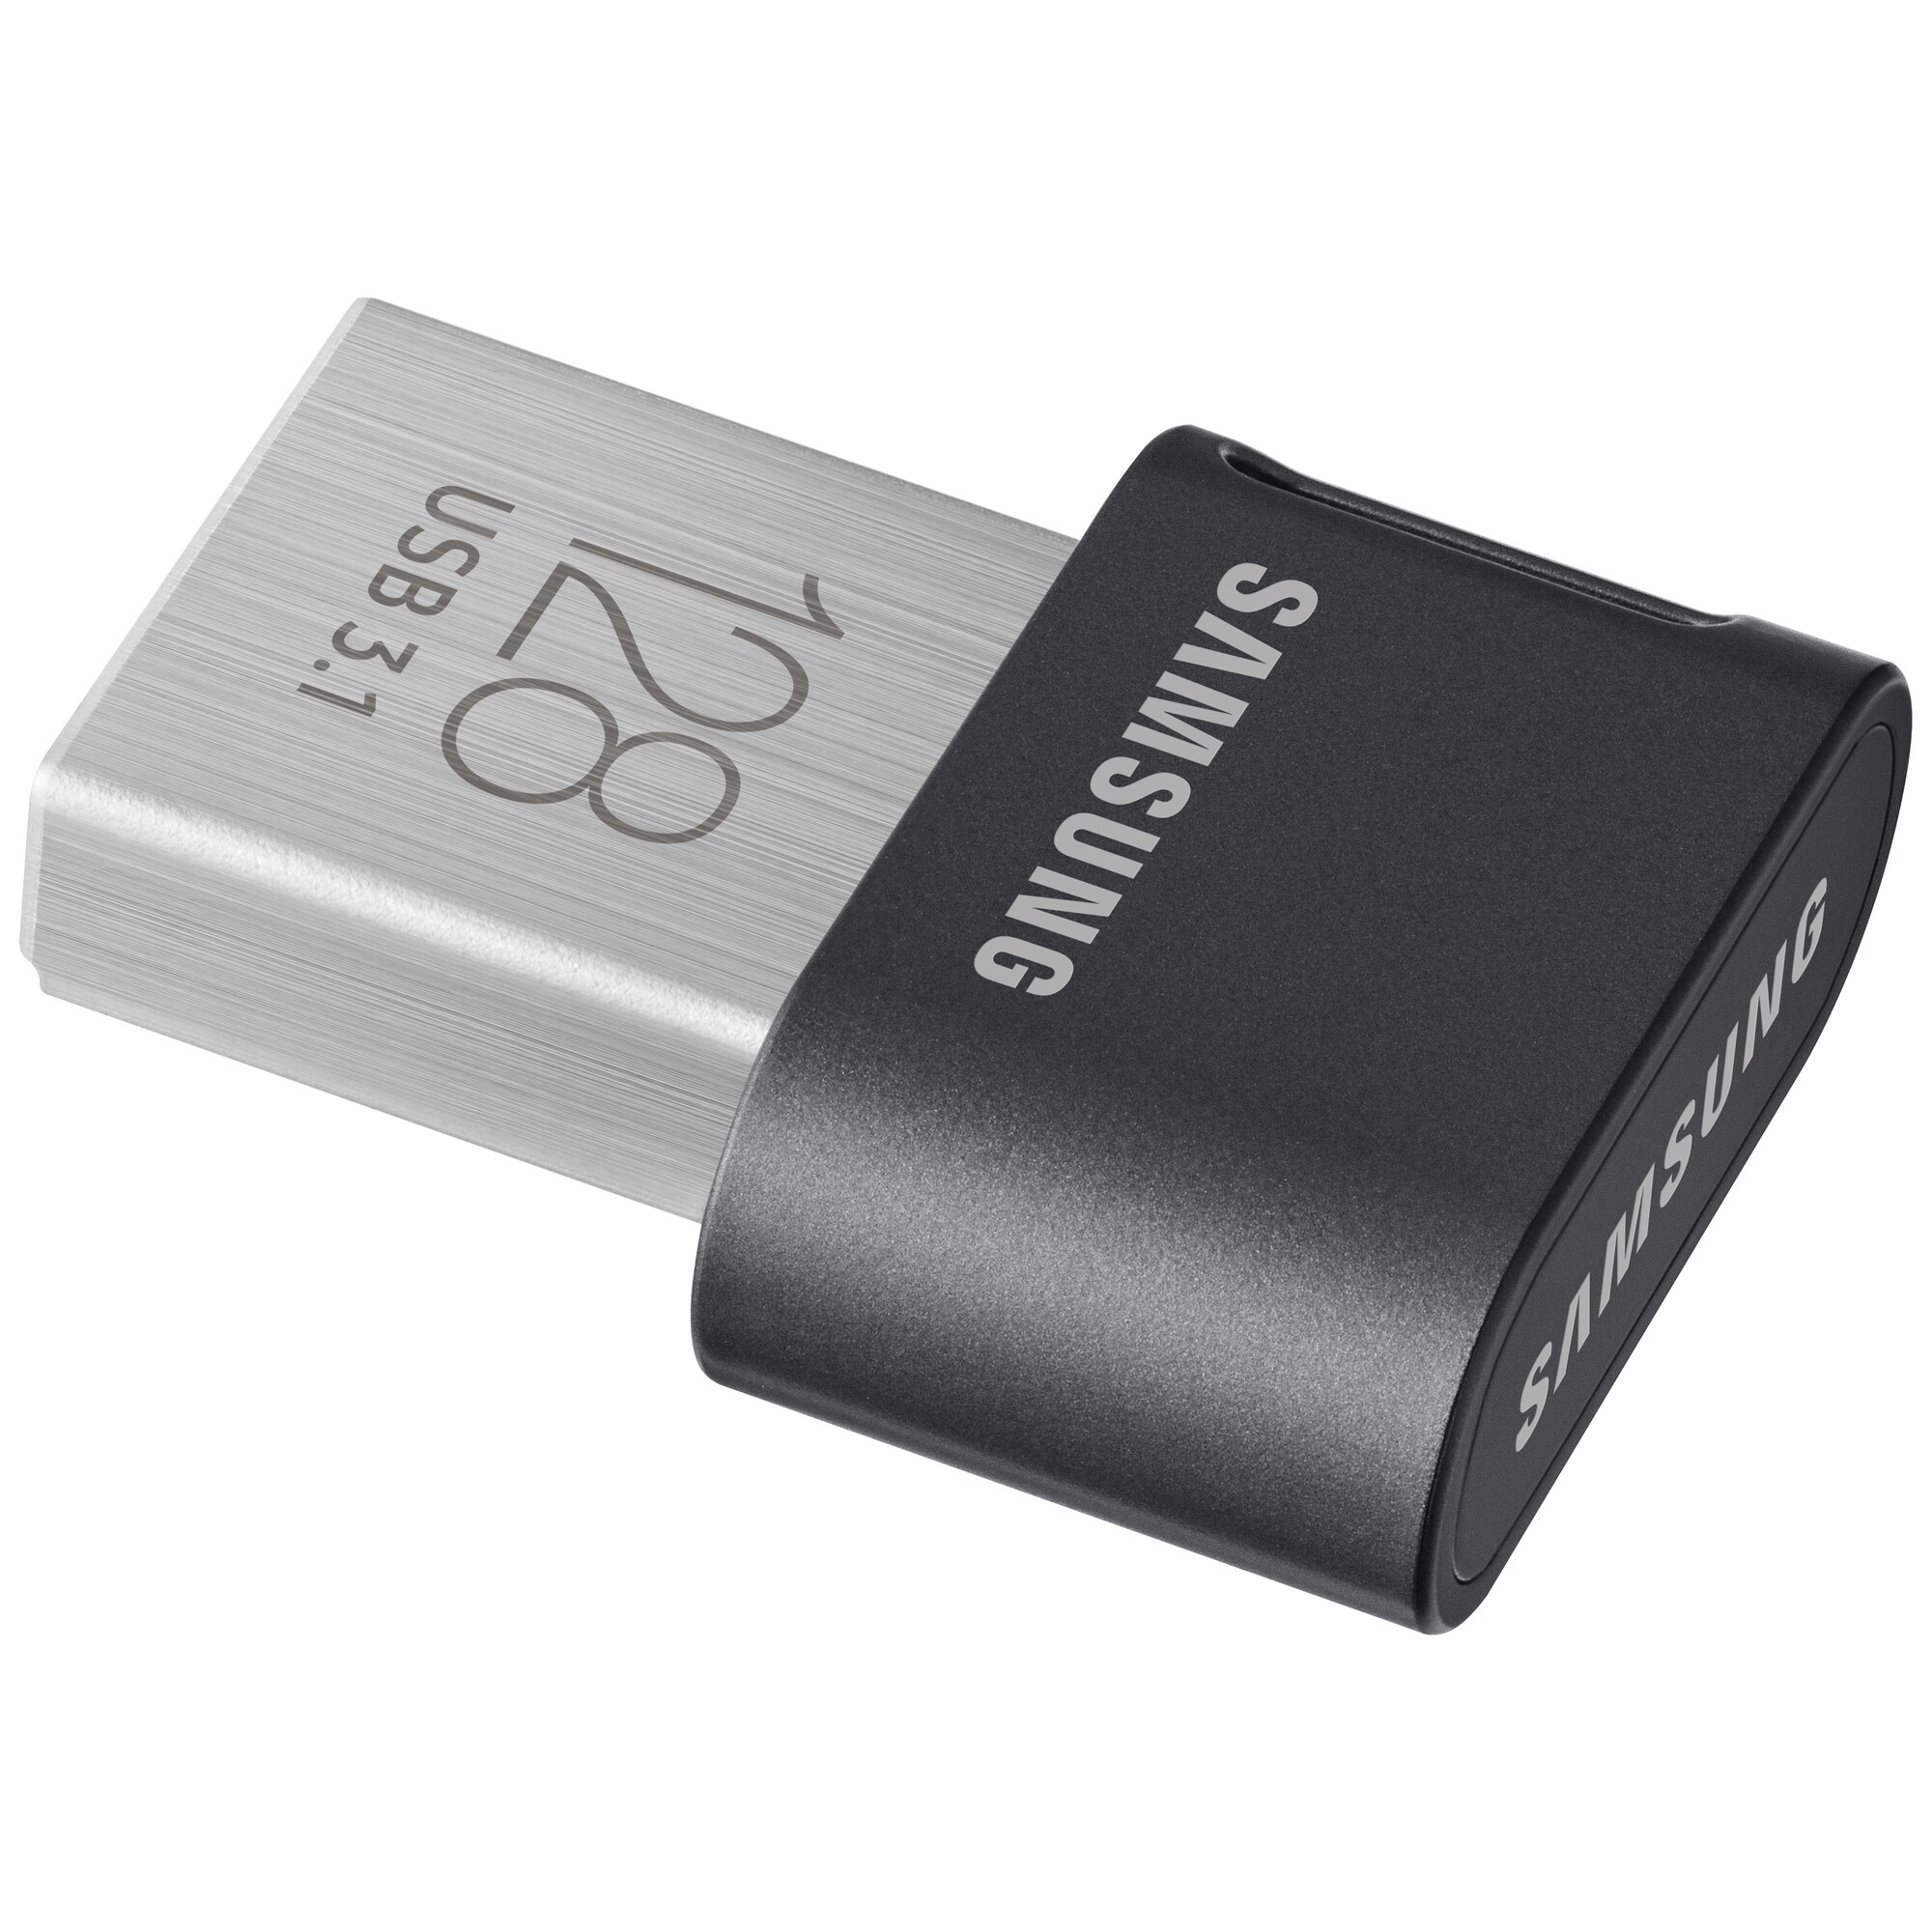 Samsung Fit Plus USB 3.1 USB minne 128 GB - Elgiganten